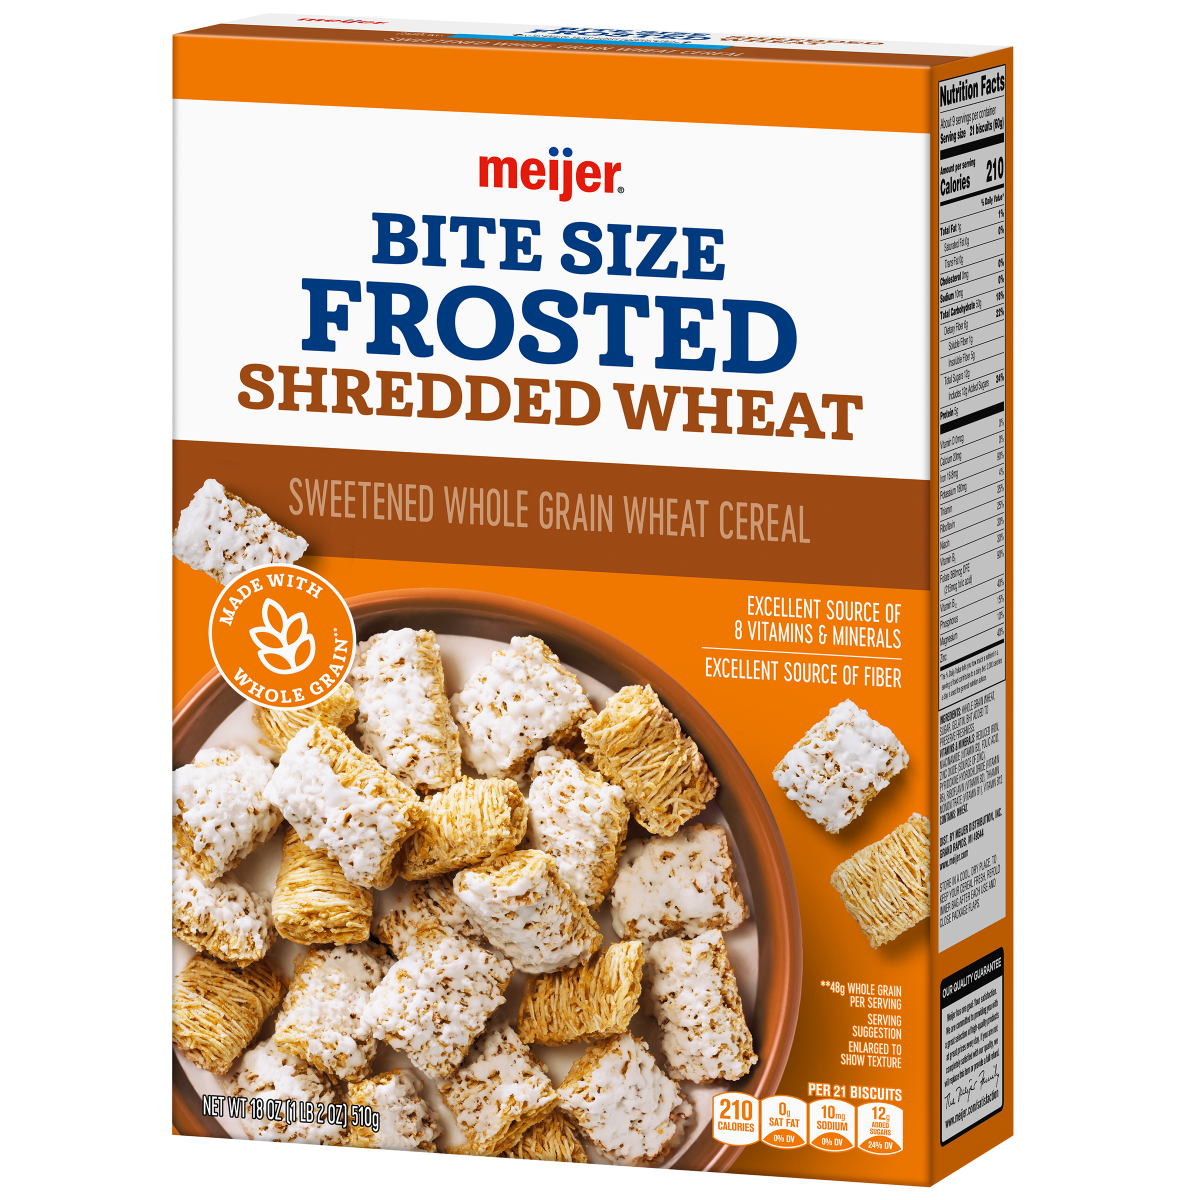 slide 10 of 29, Meijer Bite Sized Frosted Shredded Wheat Cereal, 18 oz